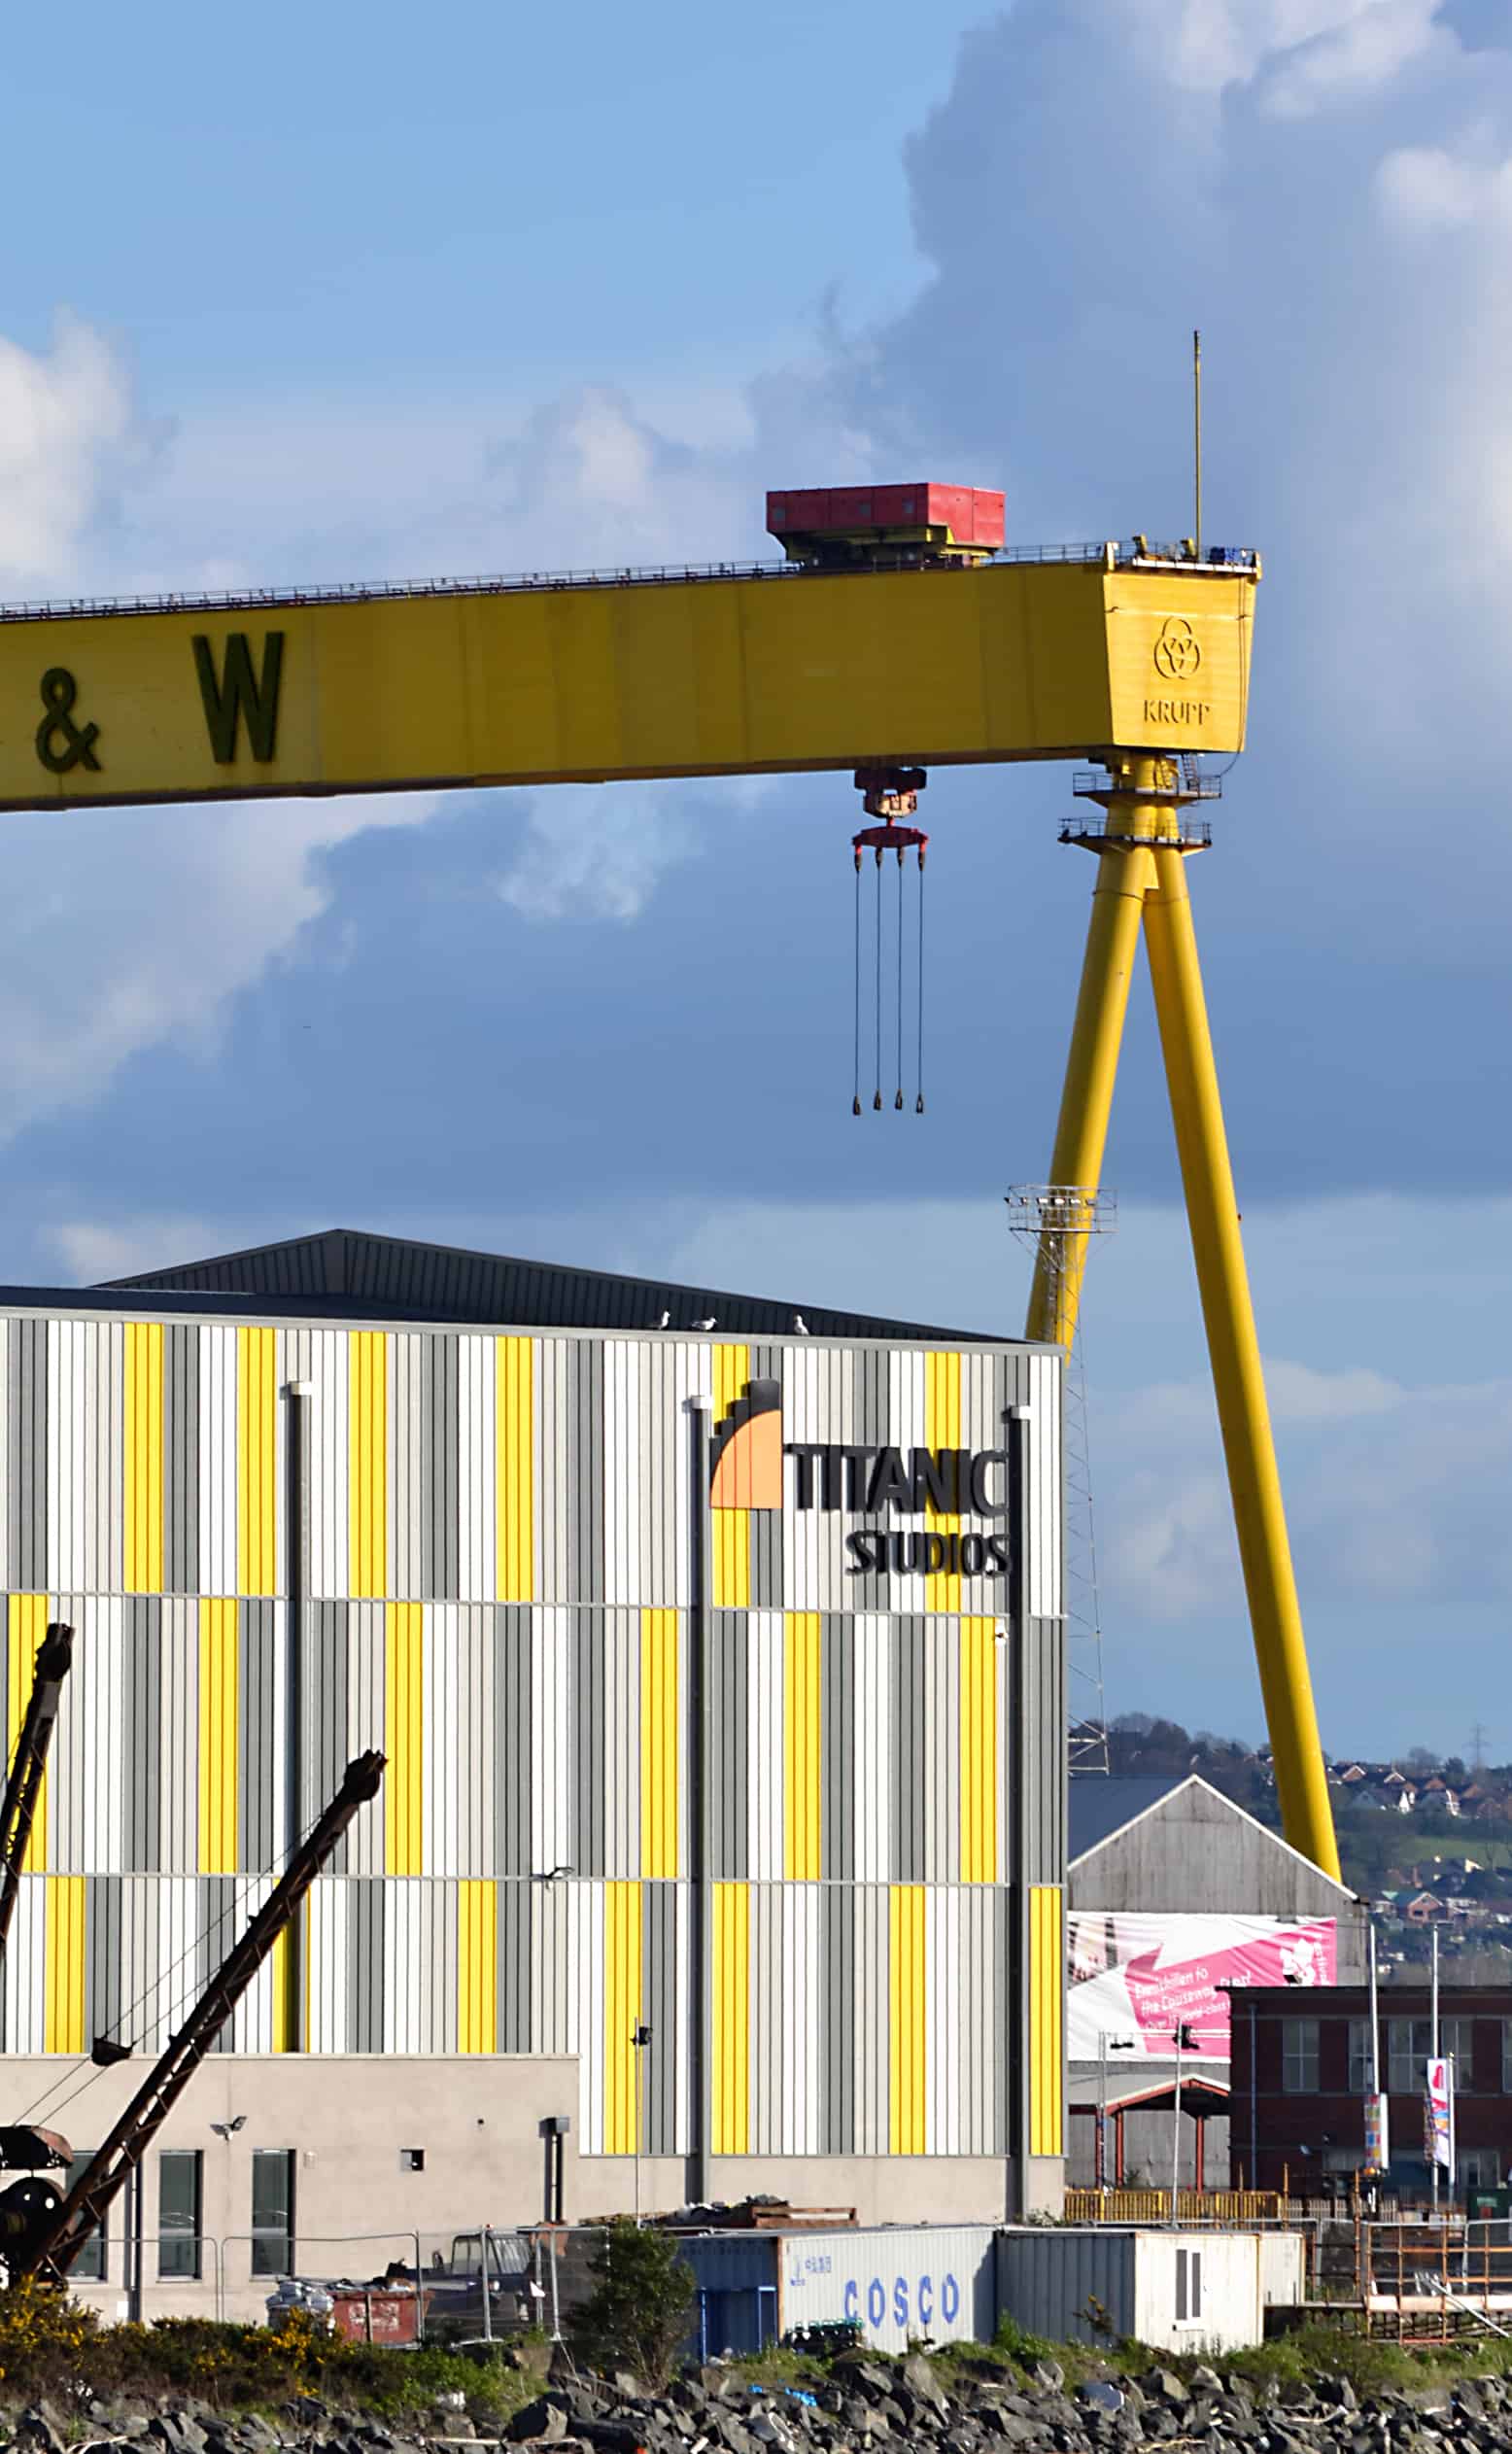 Titanic Studios with H&W crane in background